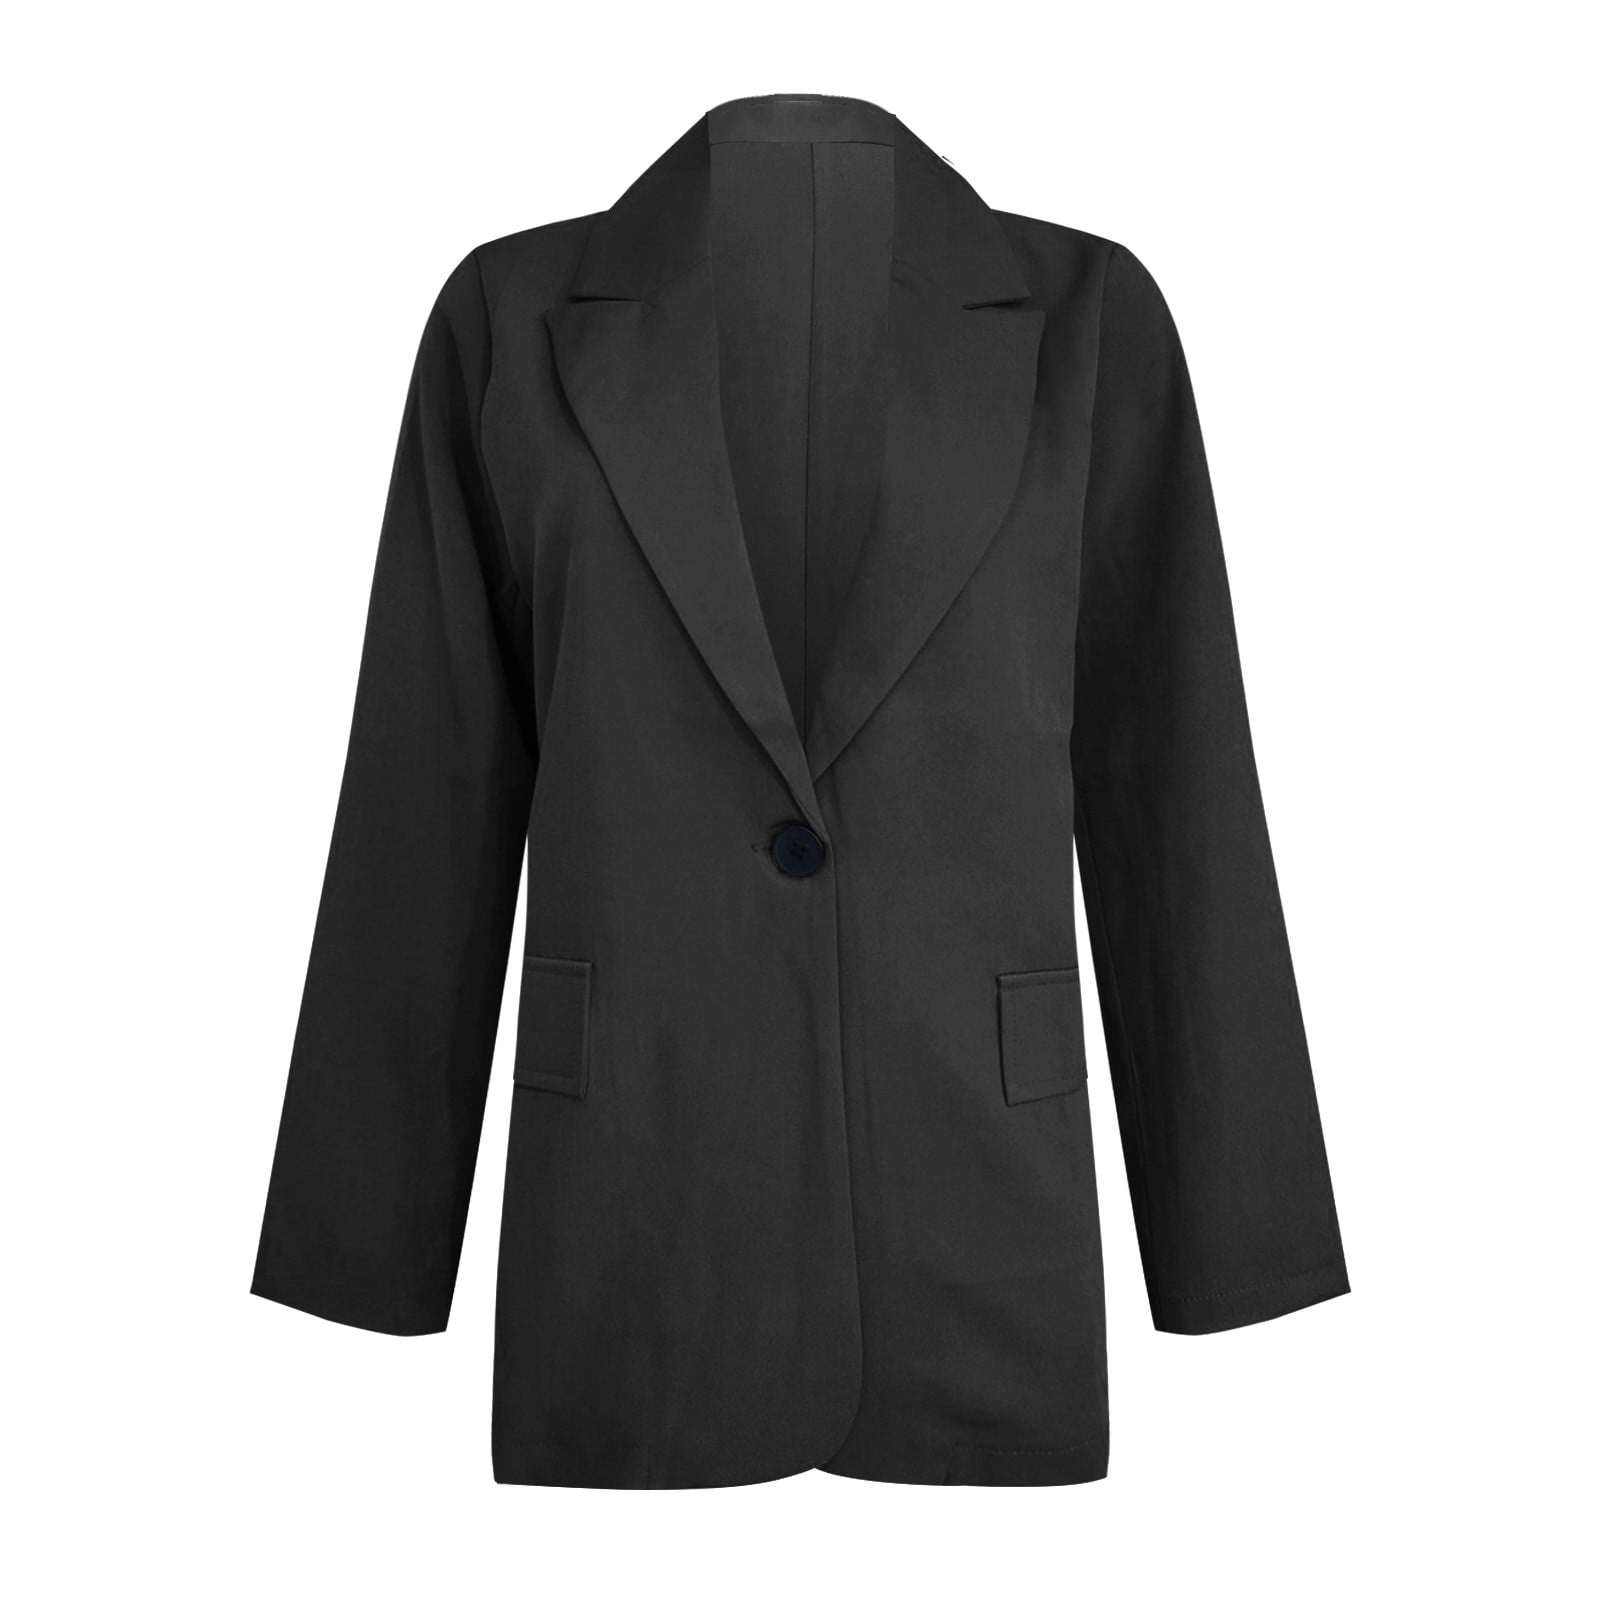 NIUREDLTD Women's Oversized Suit Jackets Long Sleeve Solid Color Fitted  Work Office Outerwear Lapel Single Button Blazer Jackets Coat Black 5XL 